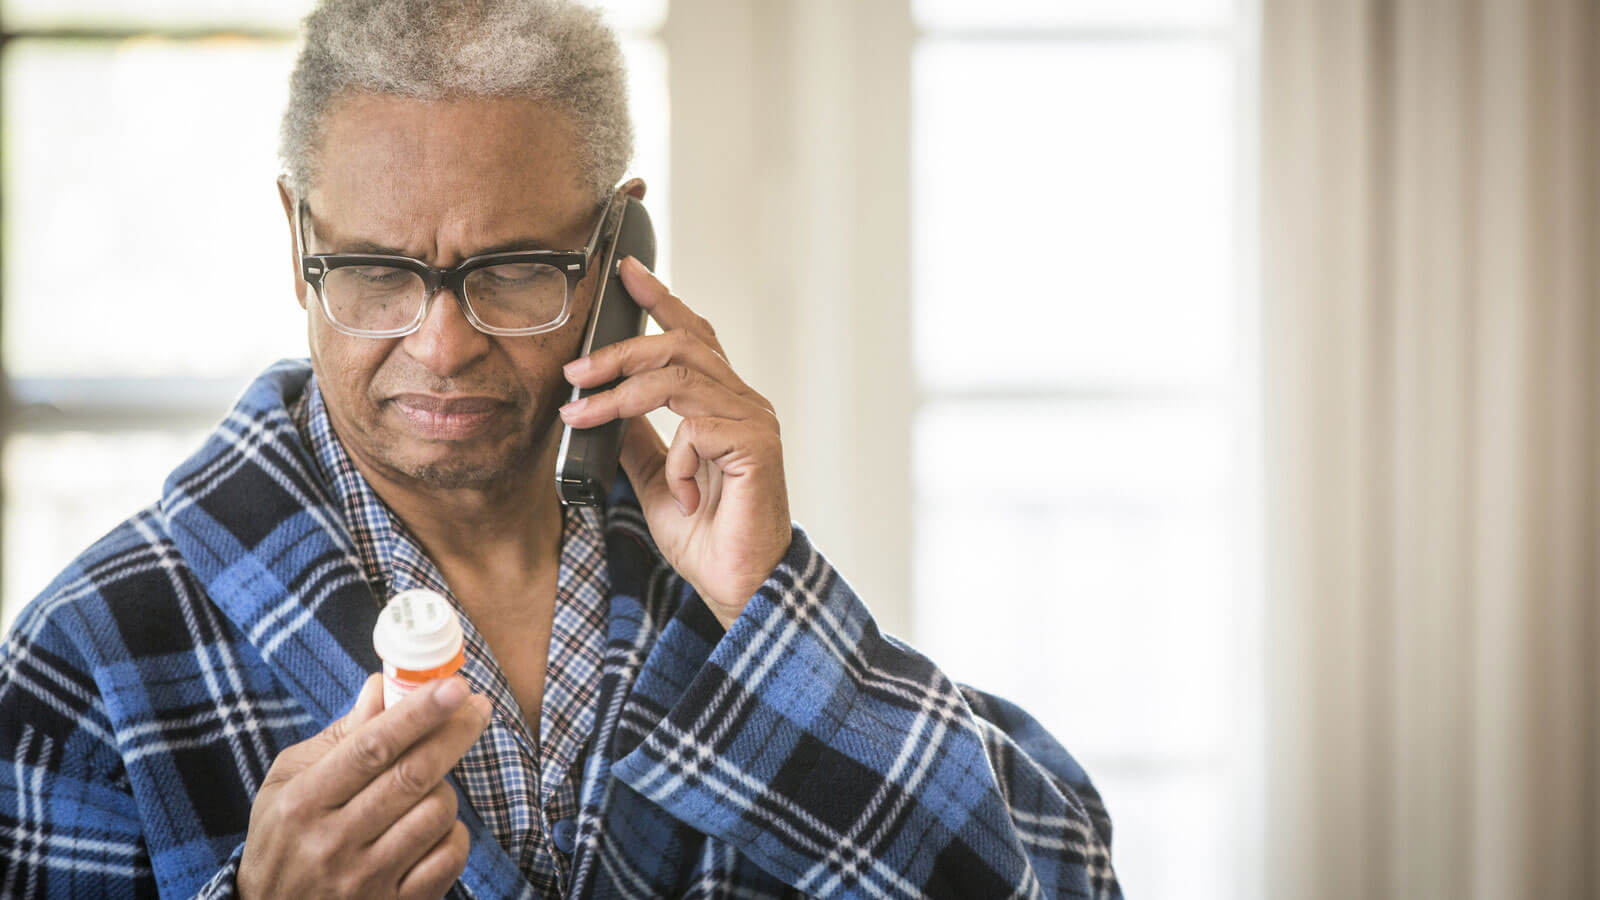 elderly man reading prescription bottle while on the phone